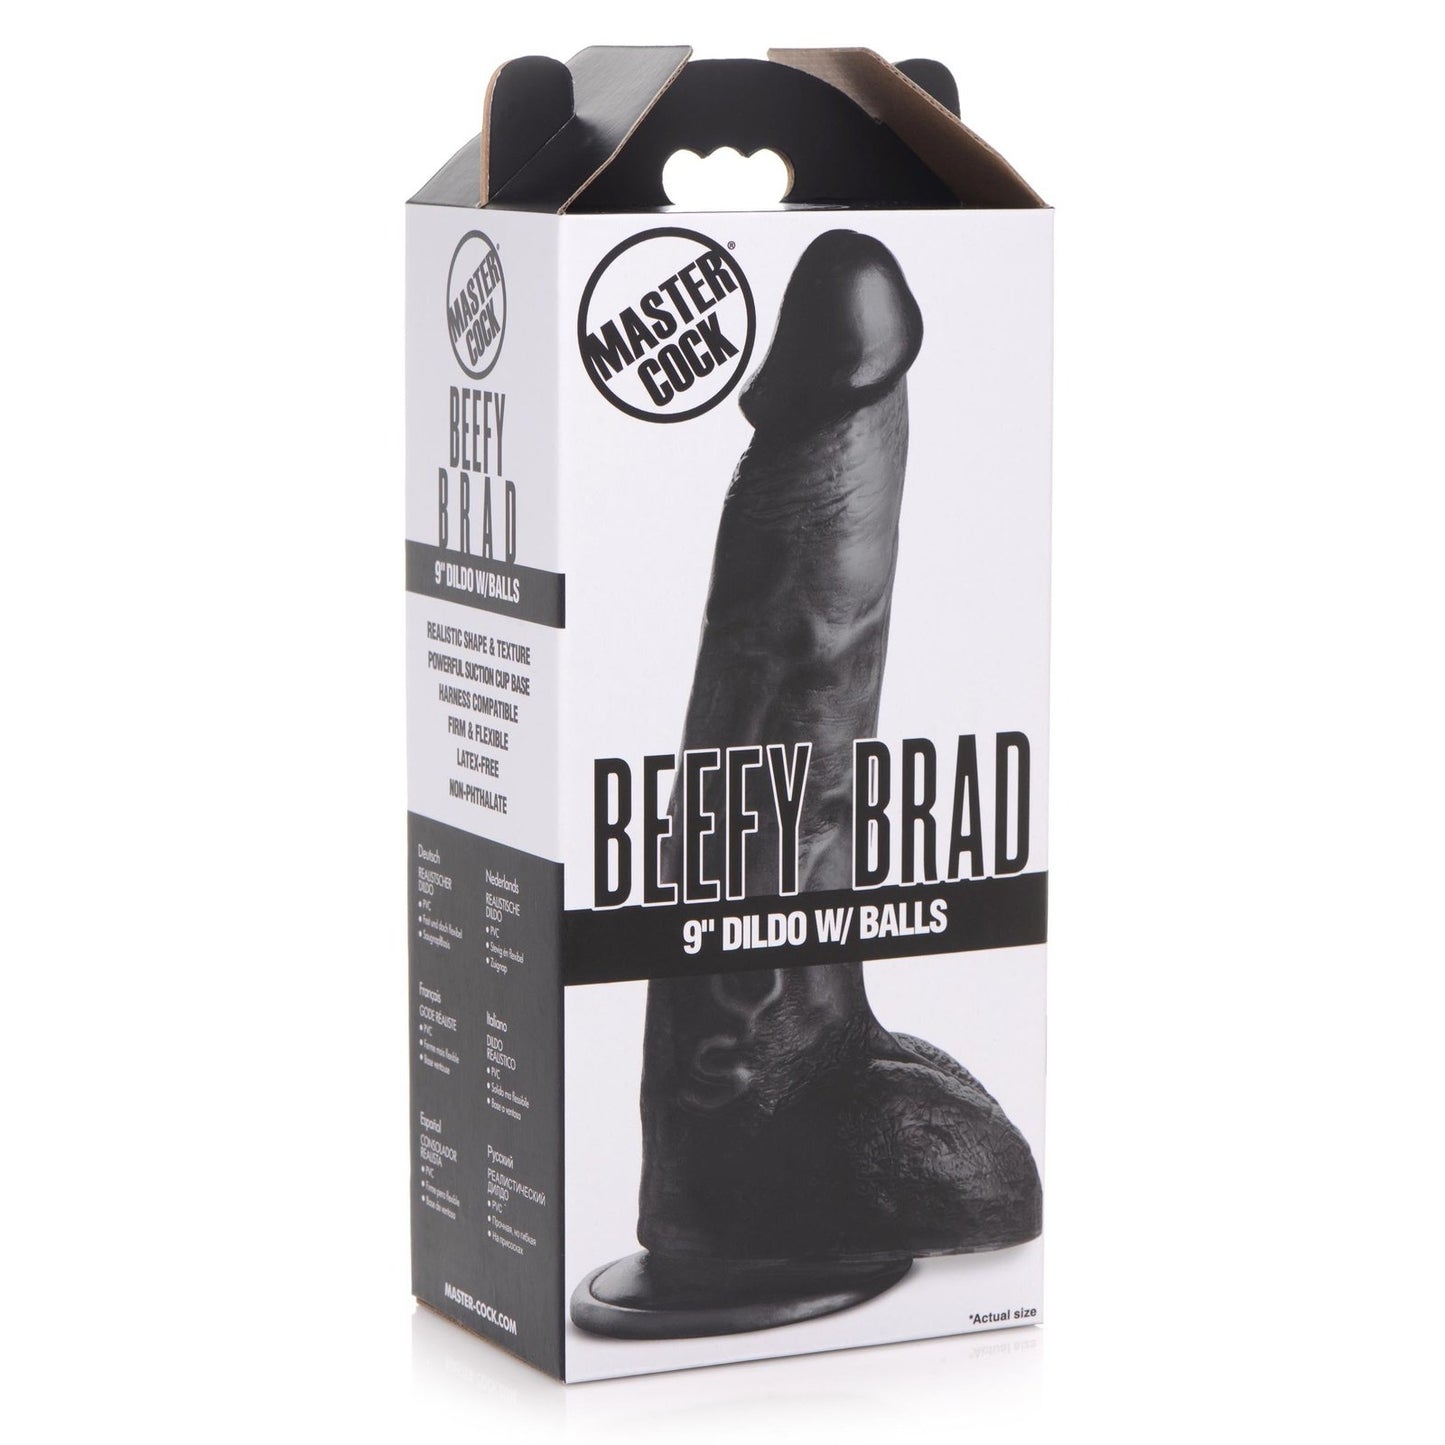 Beefy Brad 9 Inch Dildo With Balls